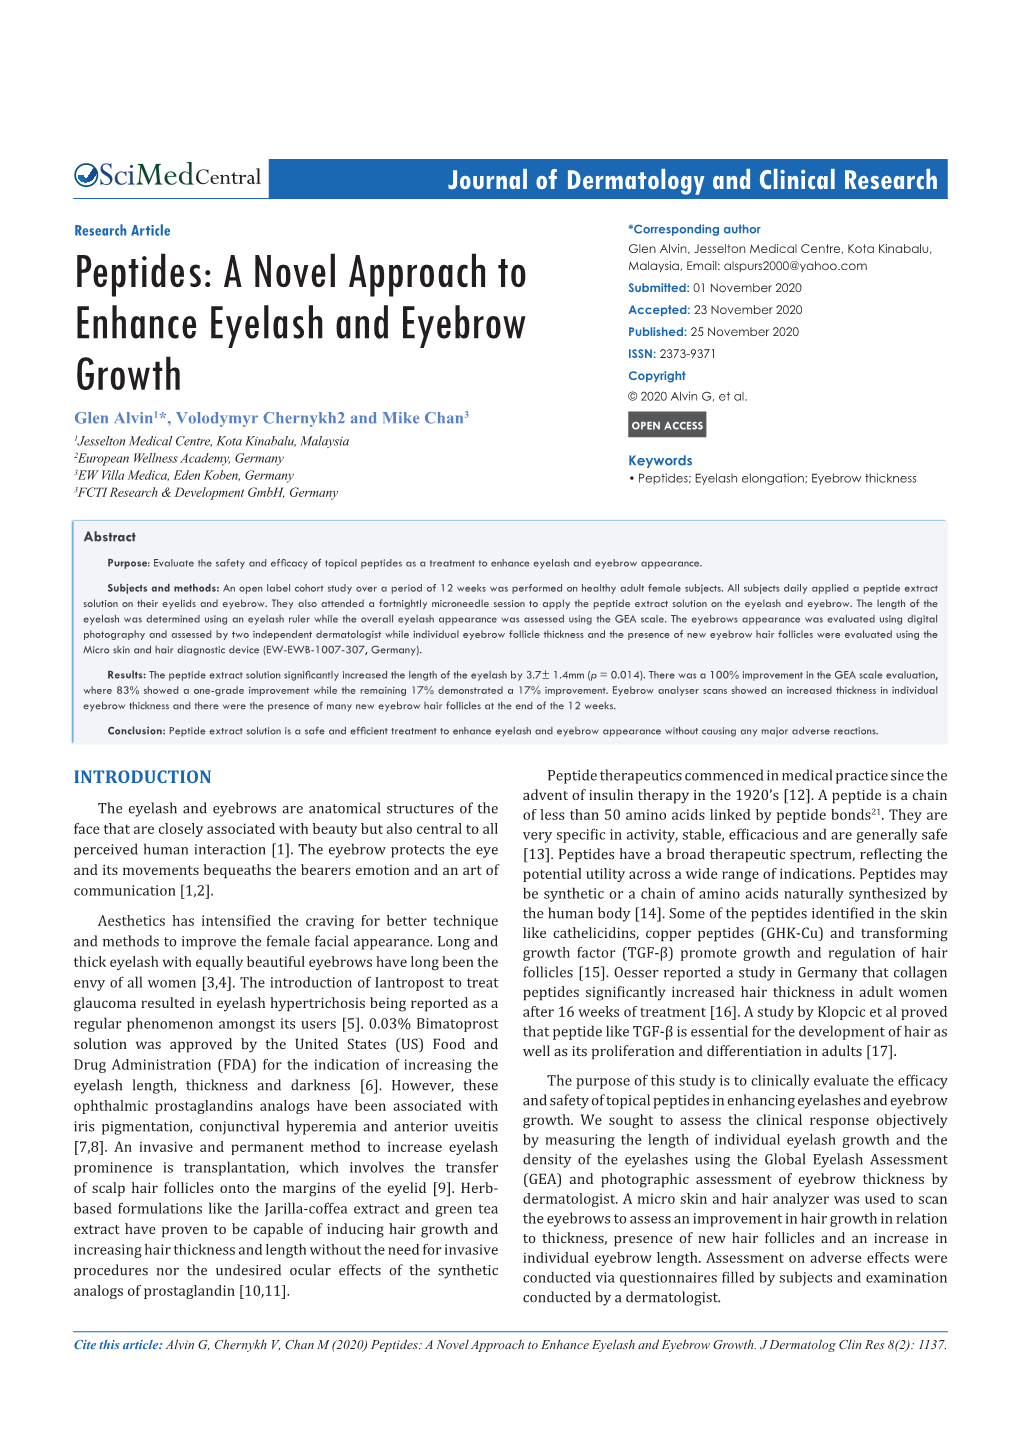 Peptides: a Novel Approach to Enhance Eyelash and Eyebrow Growth